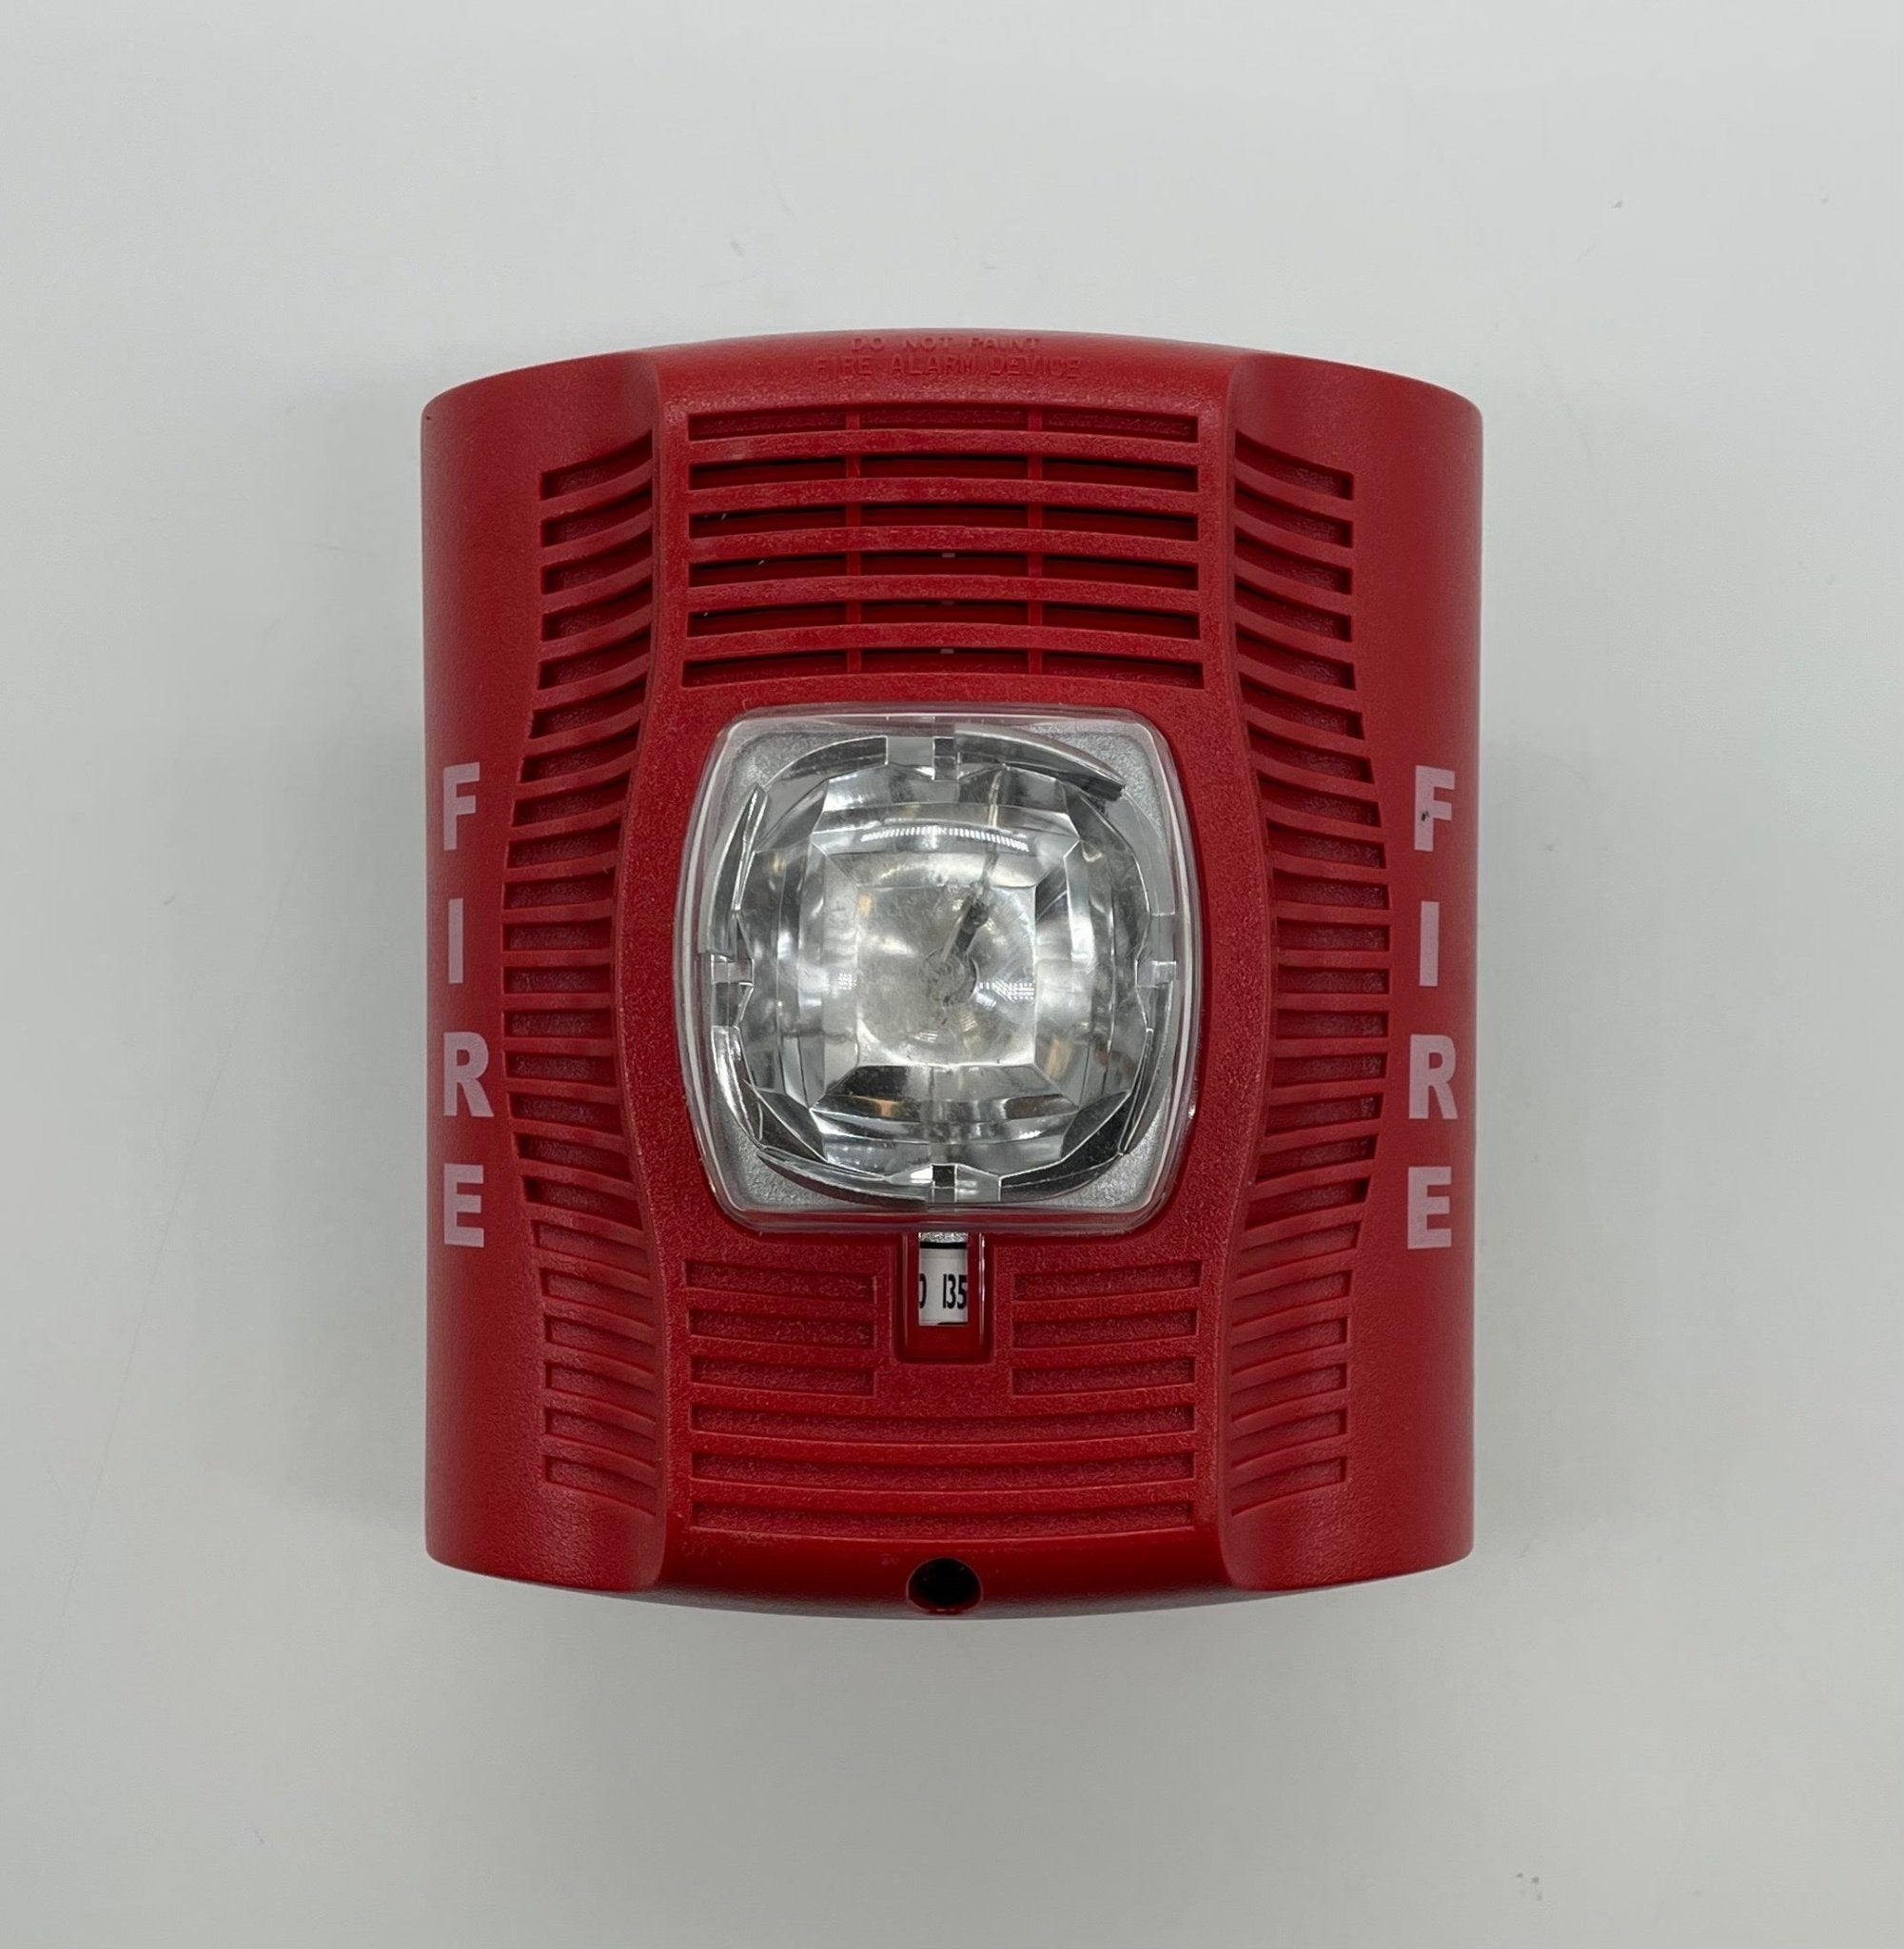 System Sensor SPSRH - The Fire Alarm Supplier